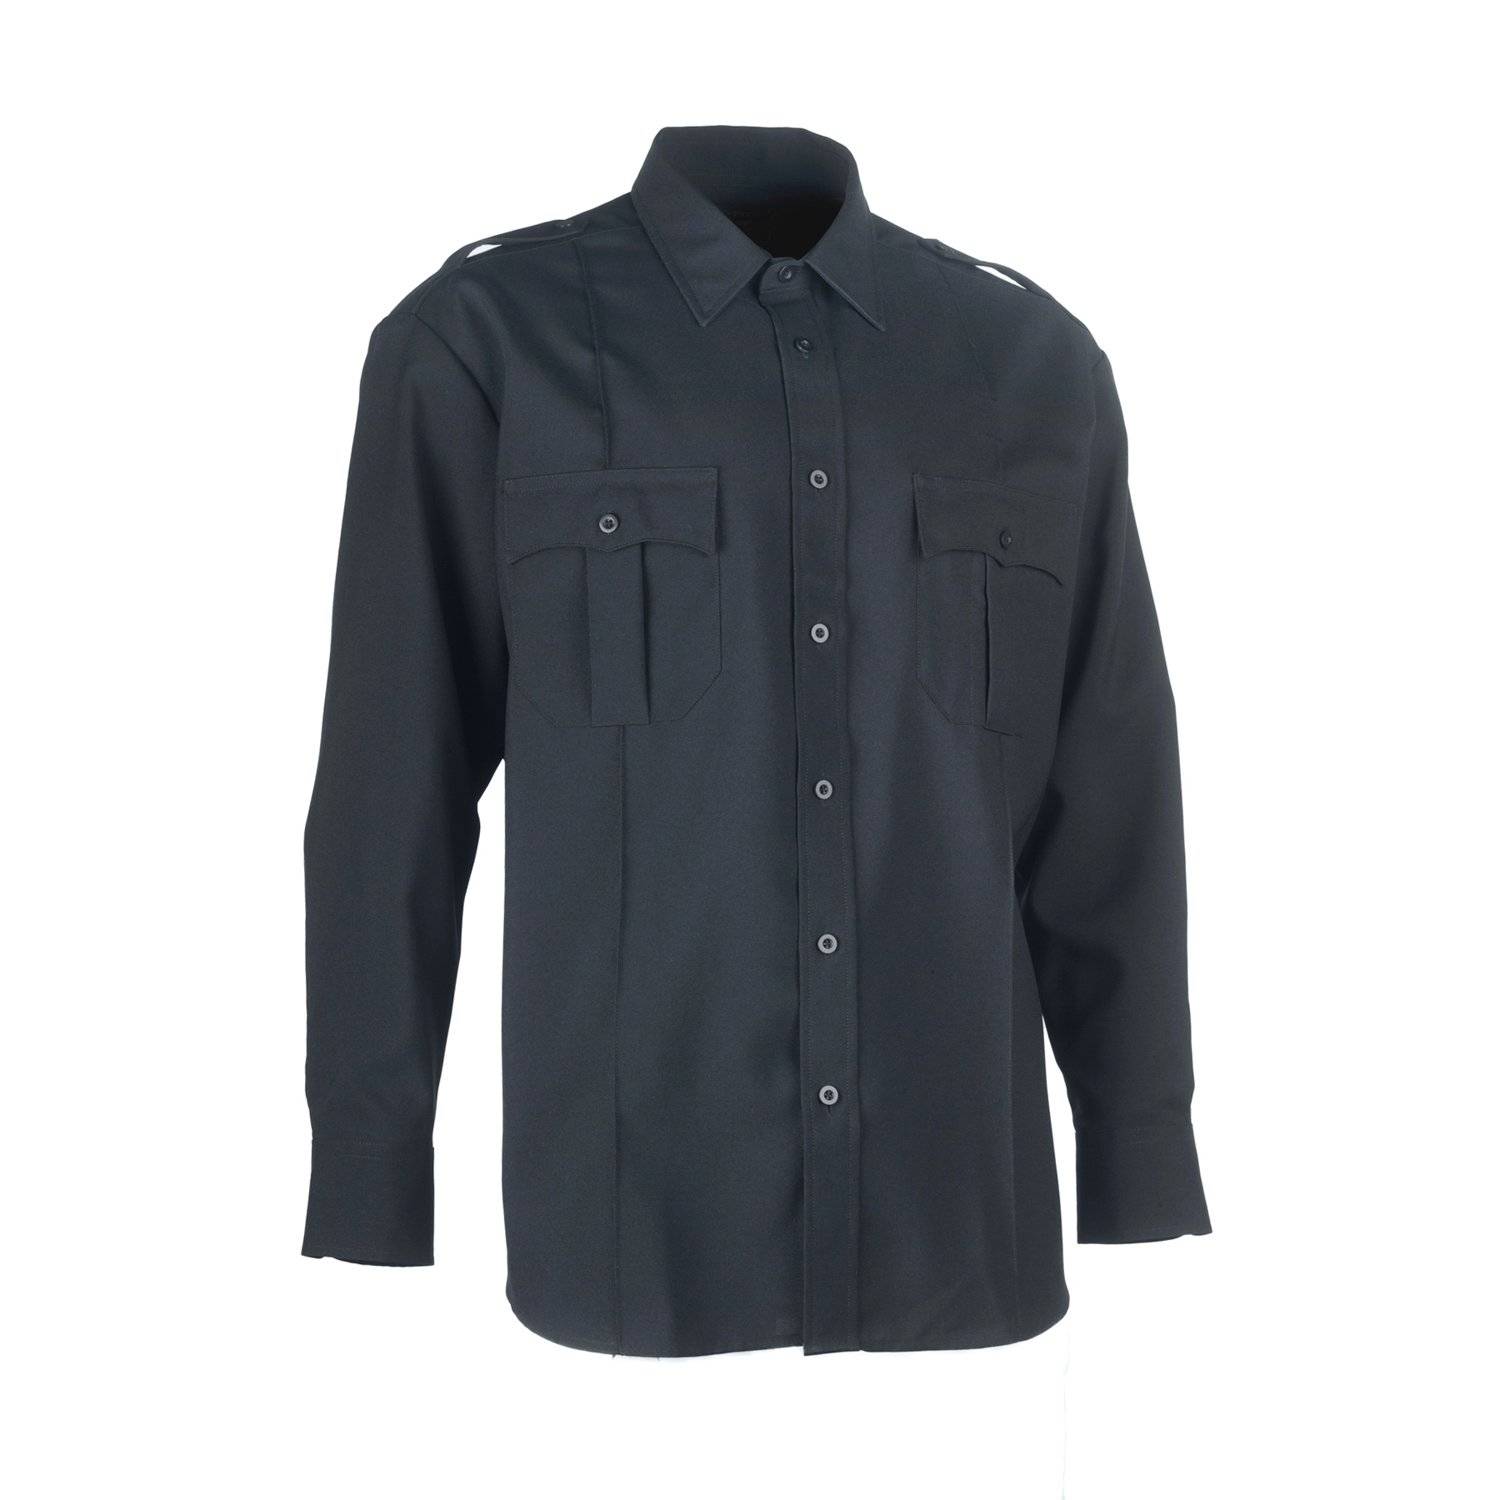 LawPro+ Men's 100% Polyester Long Sleeve Shirt